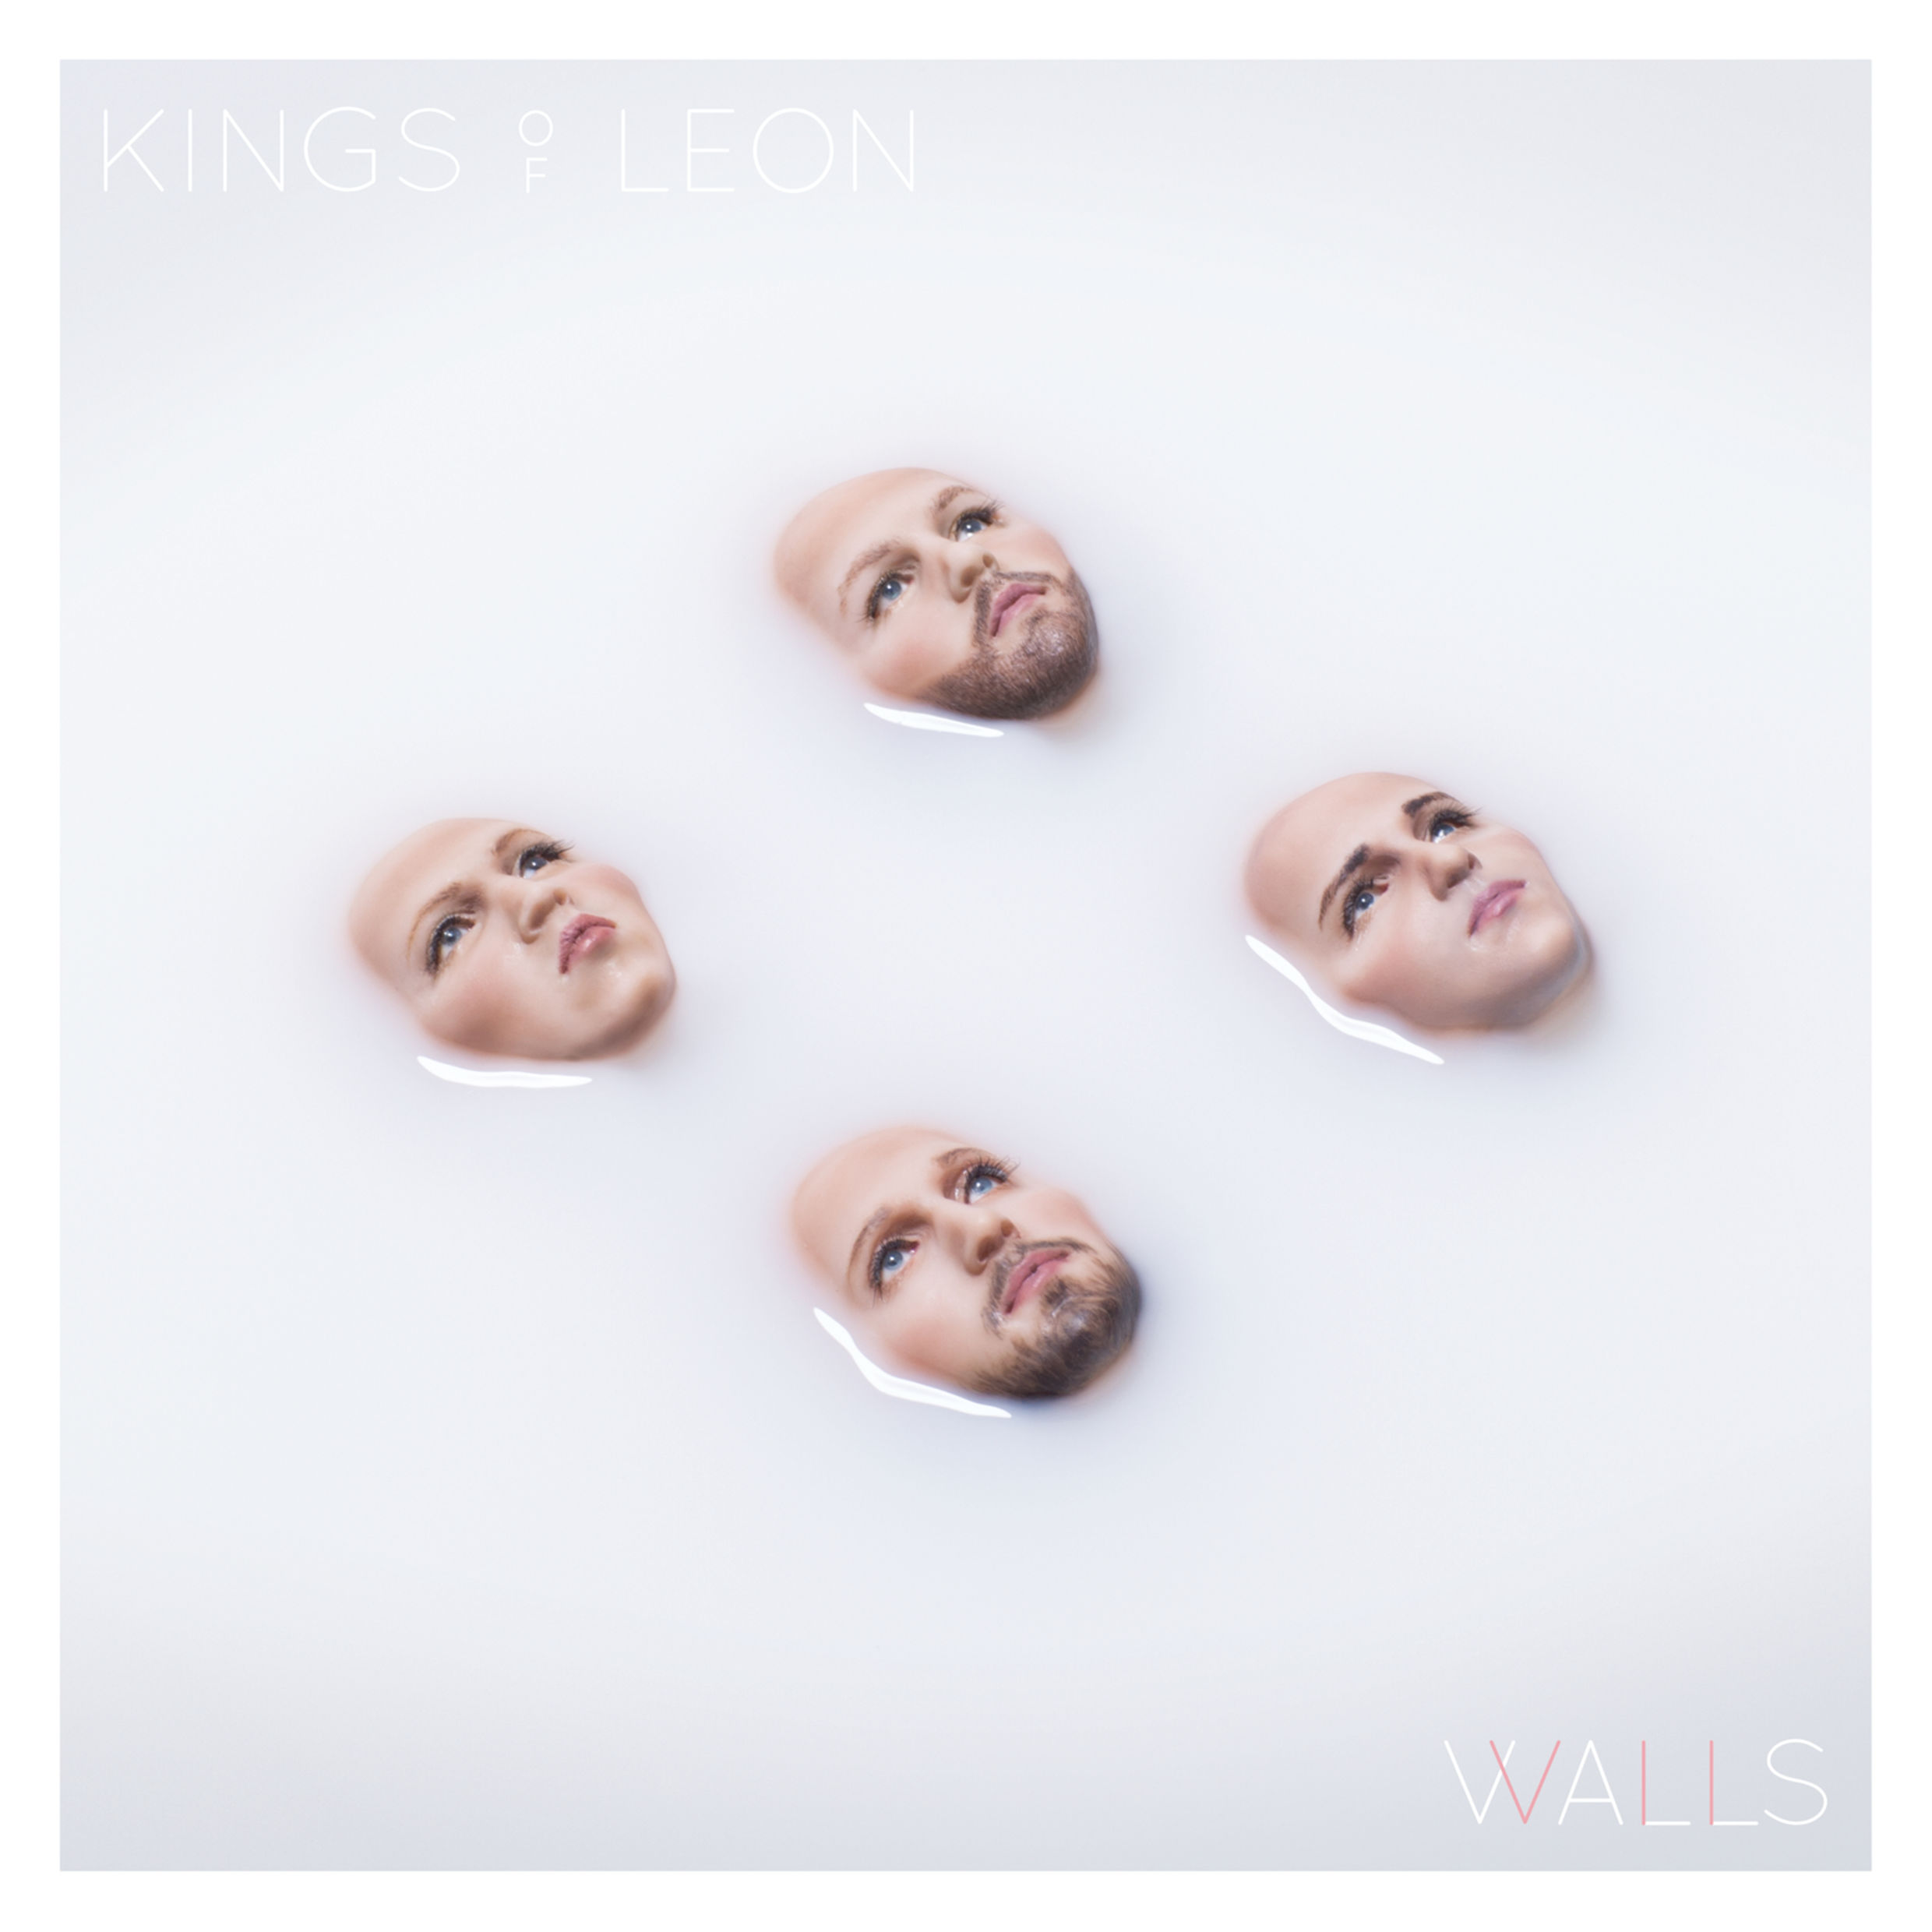 kings-of-leon-walls-2016-2480x2480